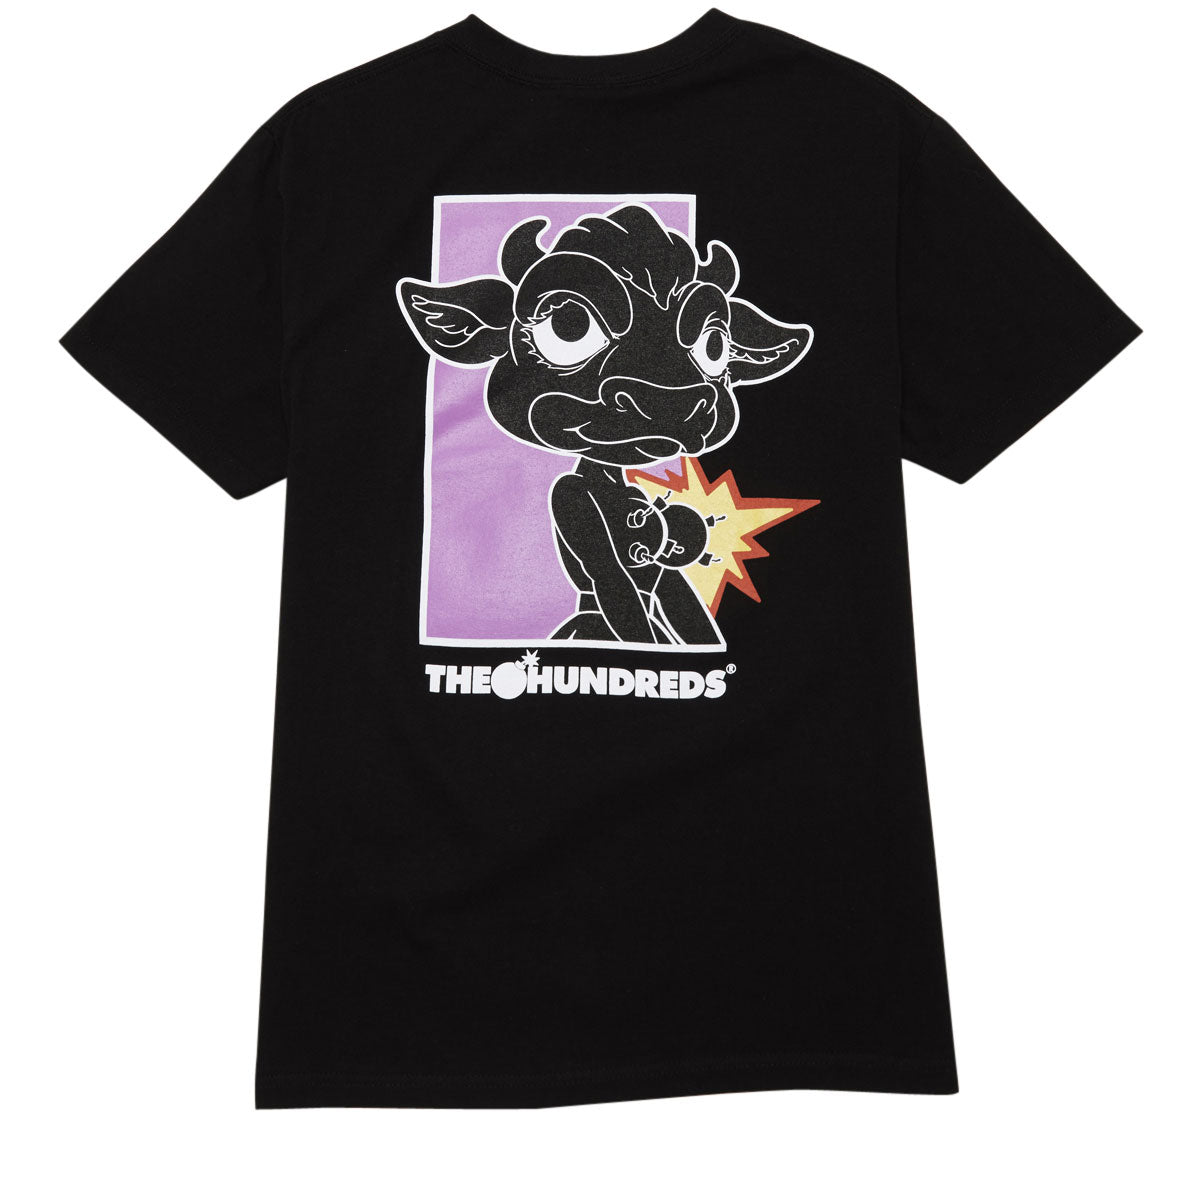 The Hundreds x Ron English Cow Girl T-Shirt - Black image 1